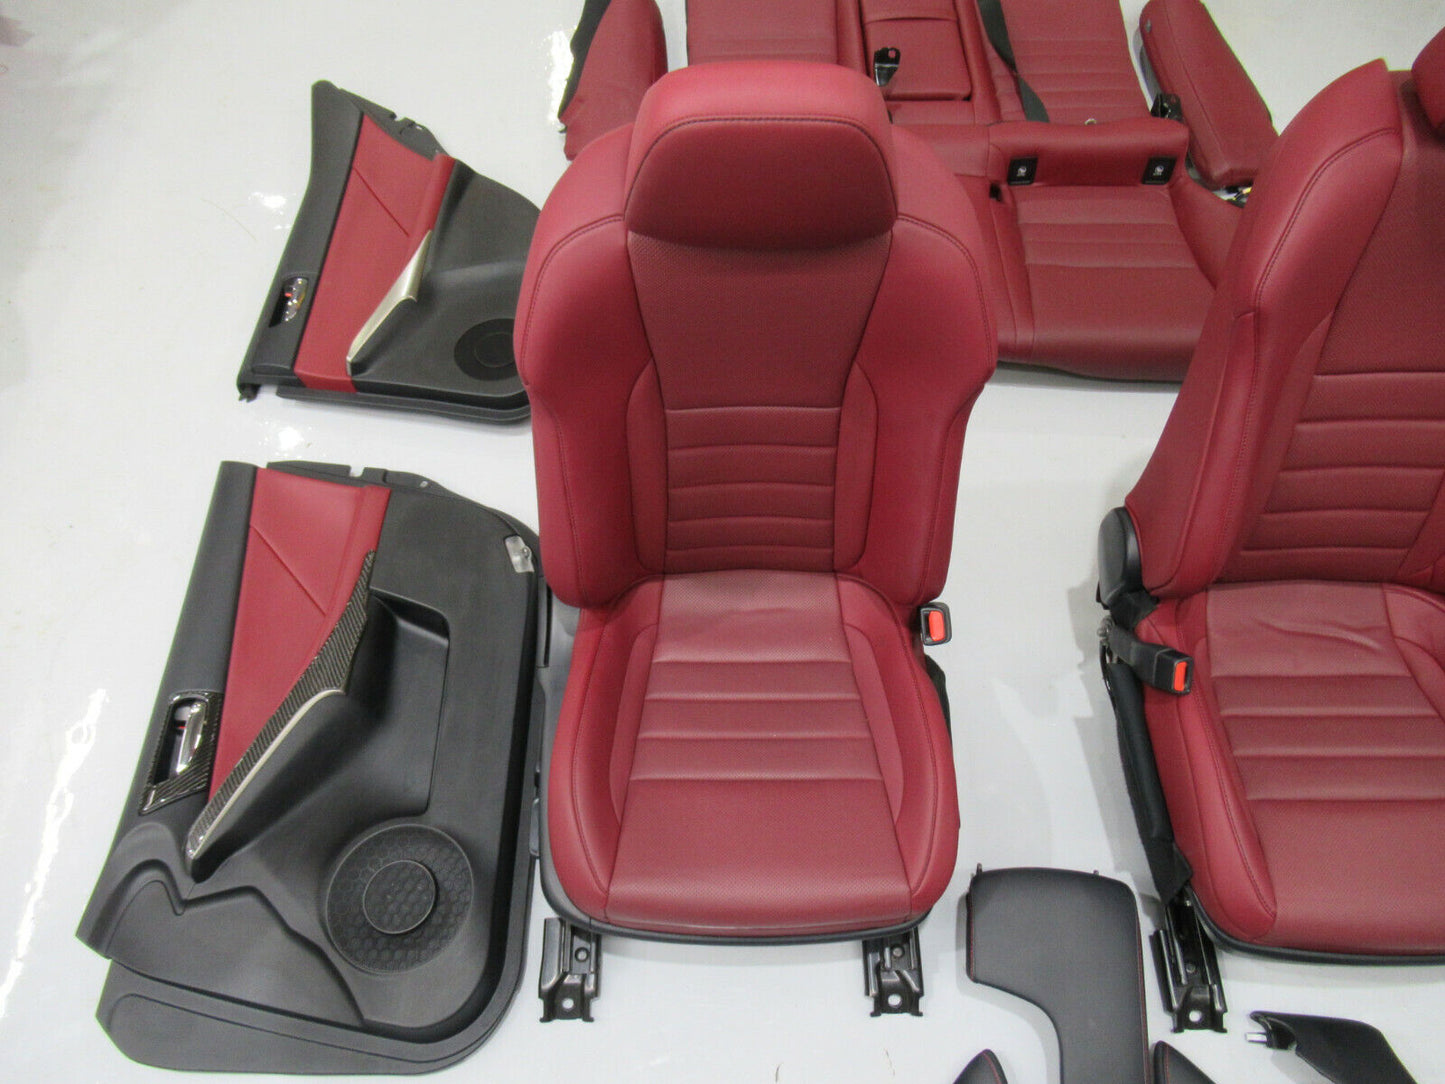 T085 2014 14 LEXUS IS350 F SPORT RED LEATHER INTERIOR SEATS TRIM PANELS